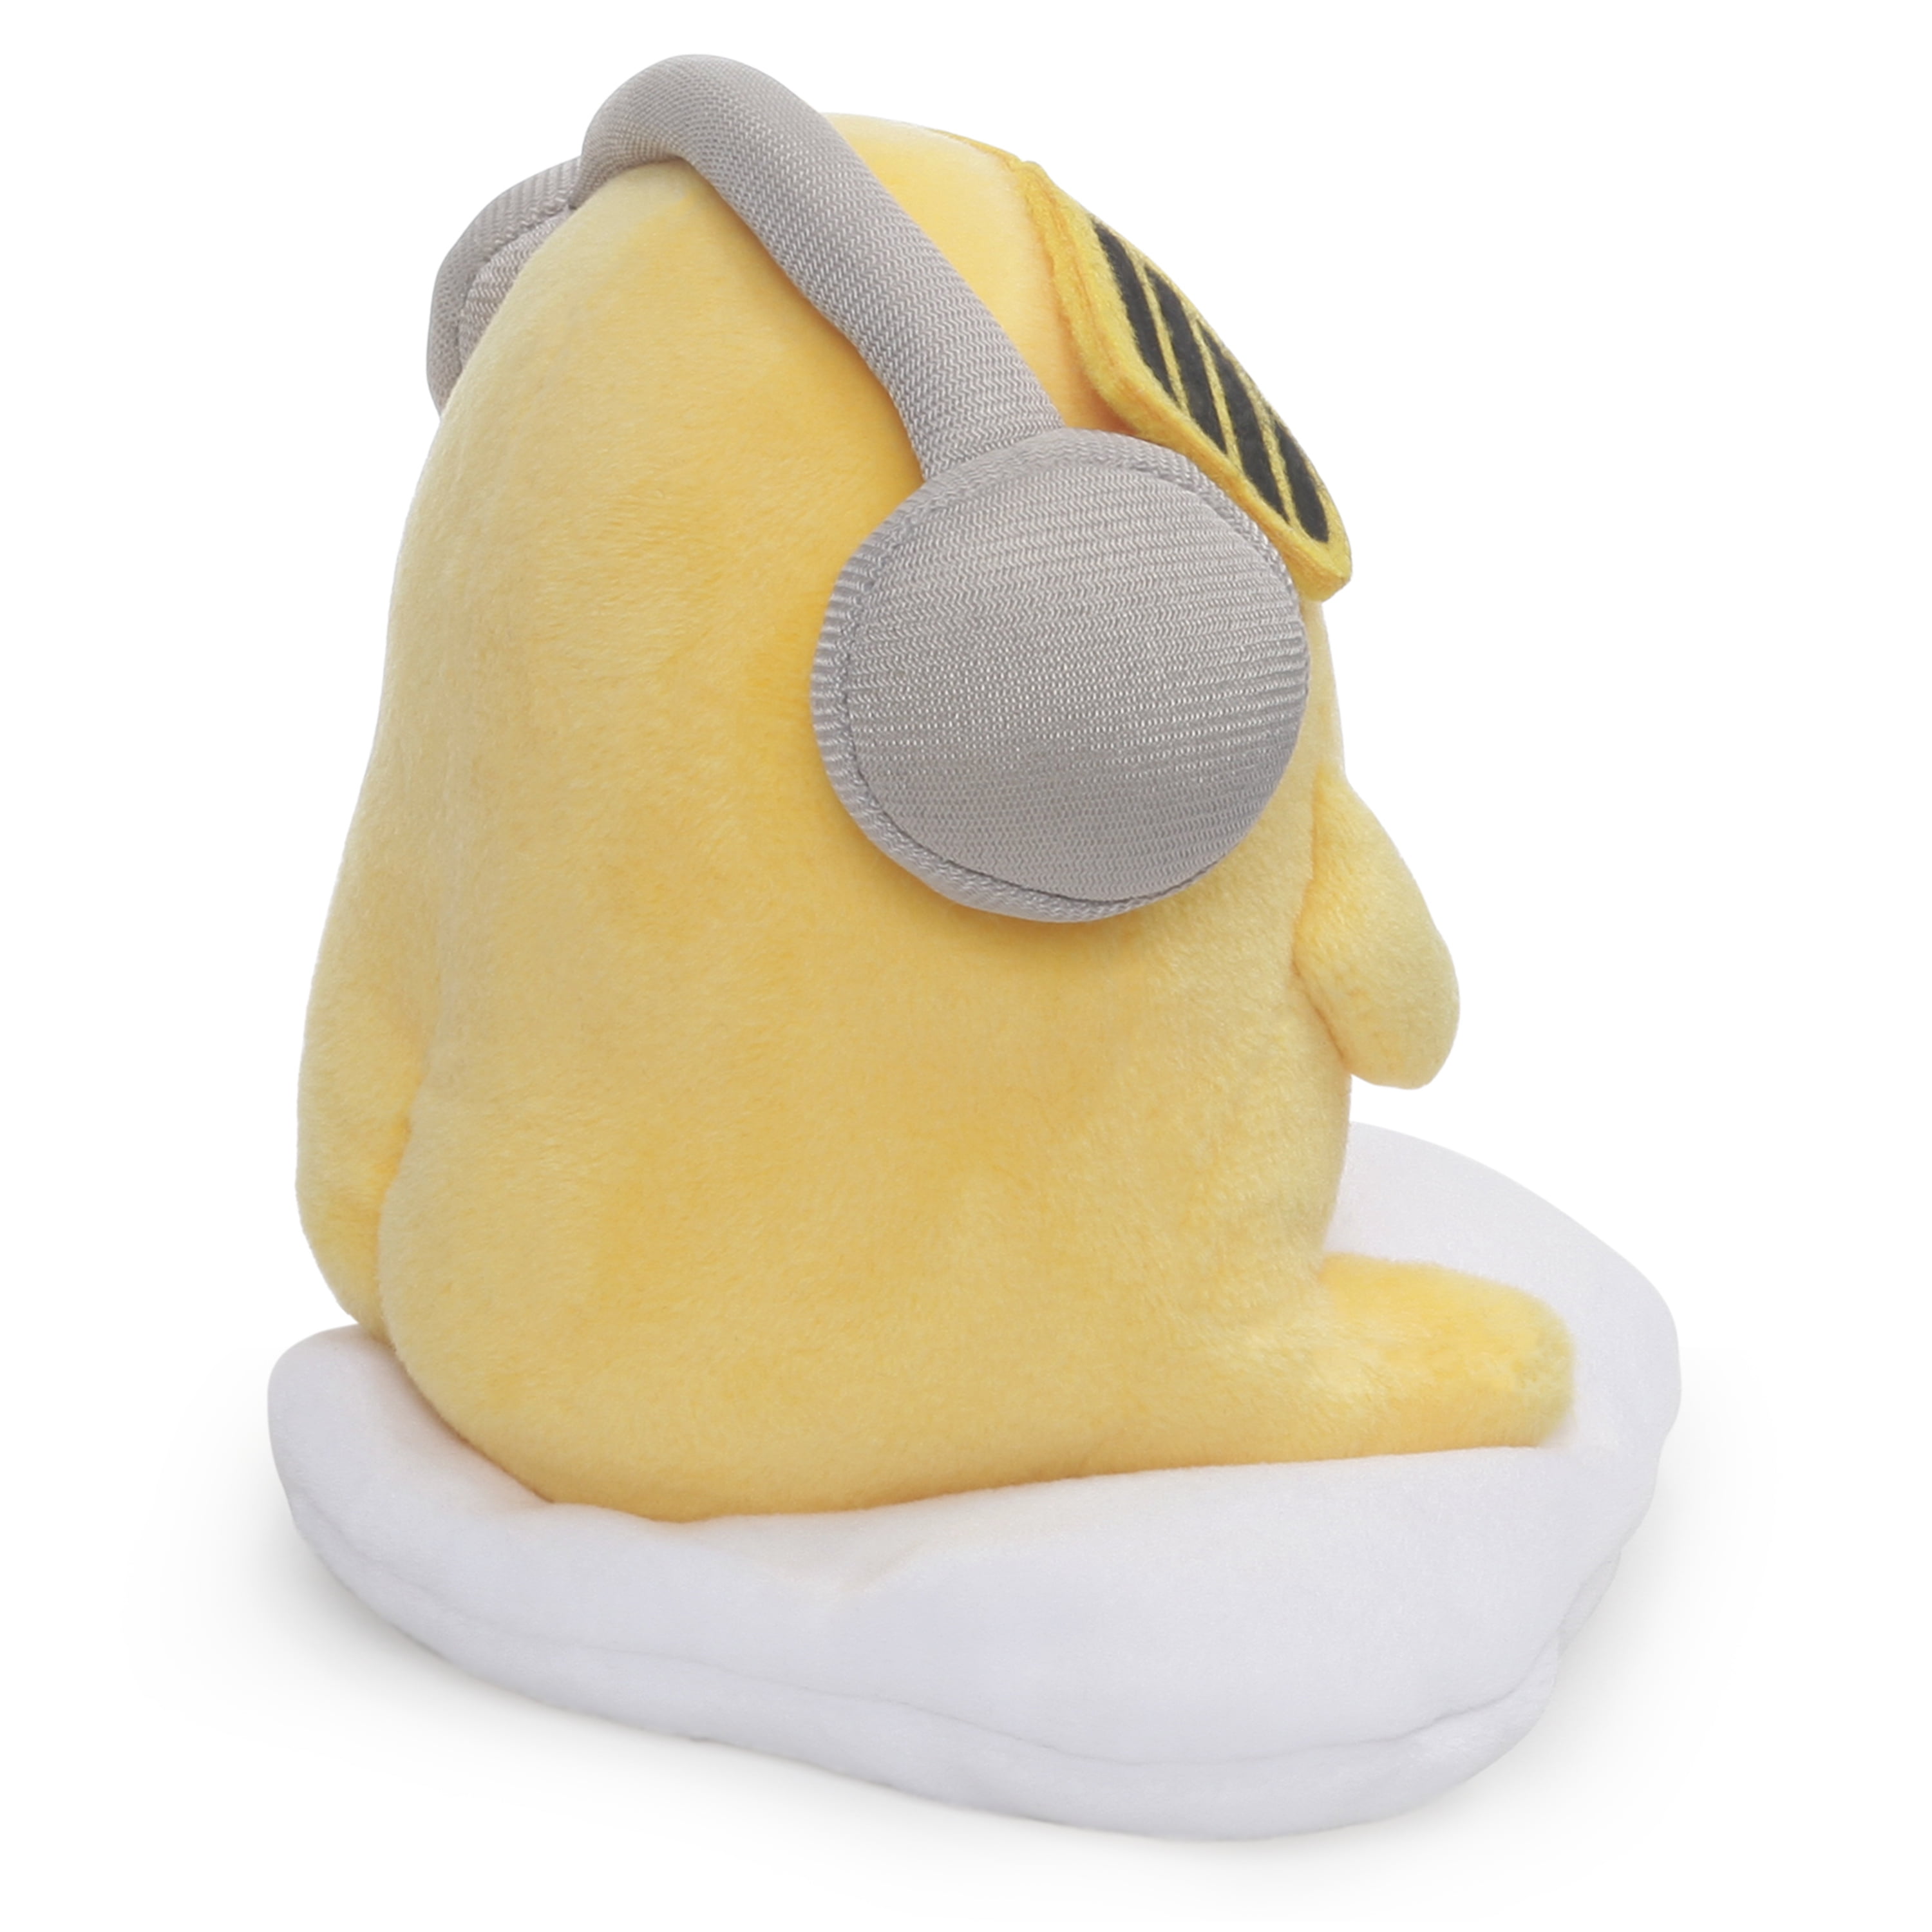 2018 Gund Gudetama Sanrio The Lazy Egg Talking Keychain Plush Doll NEW